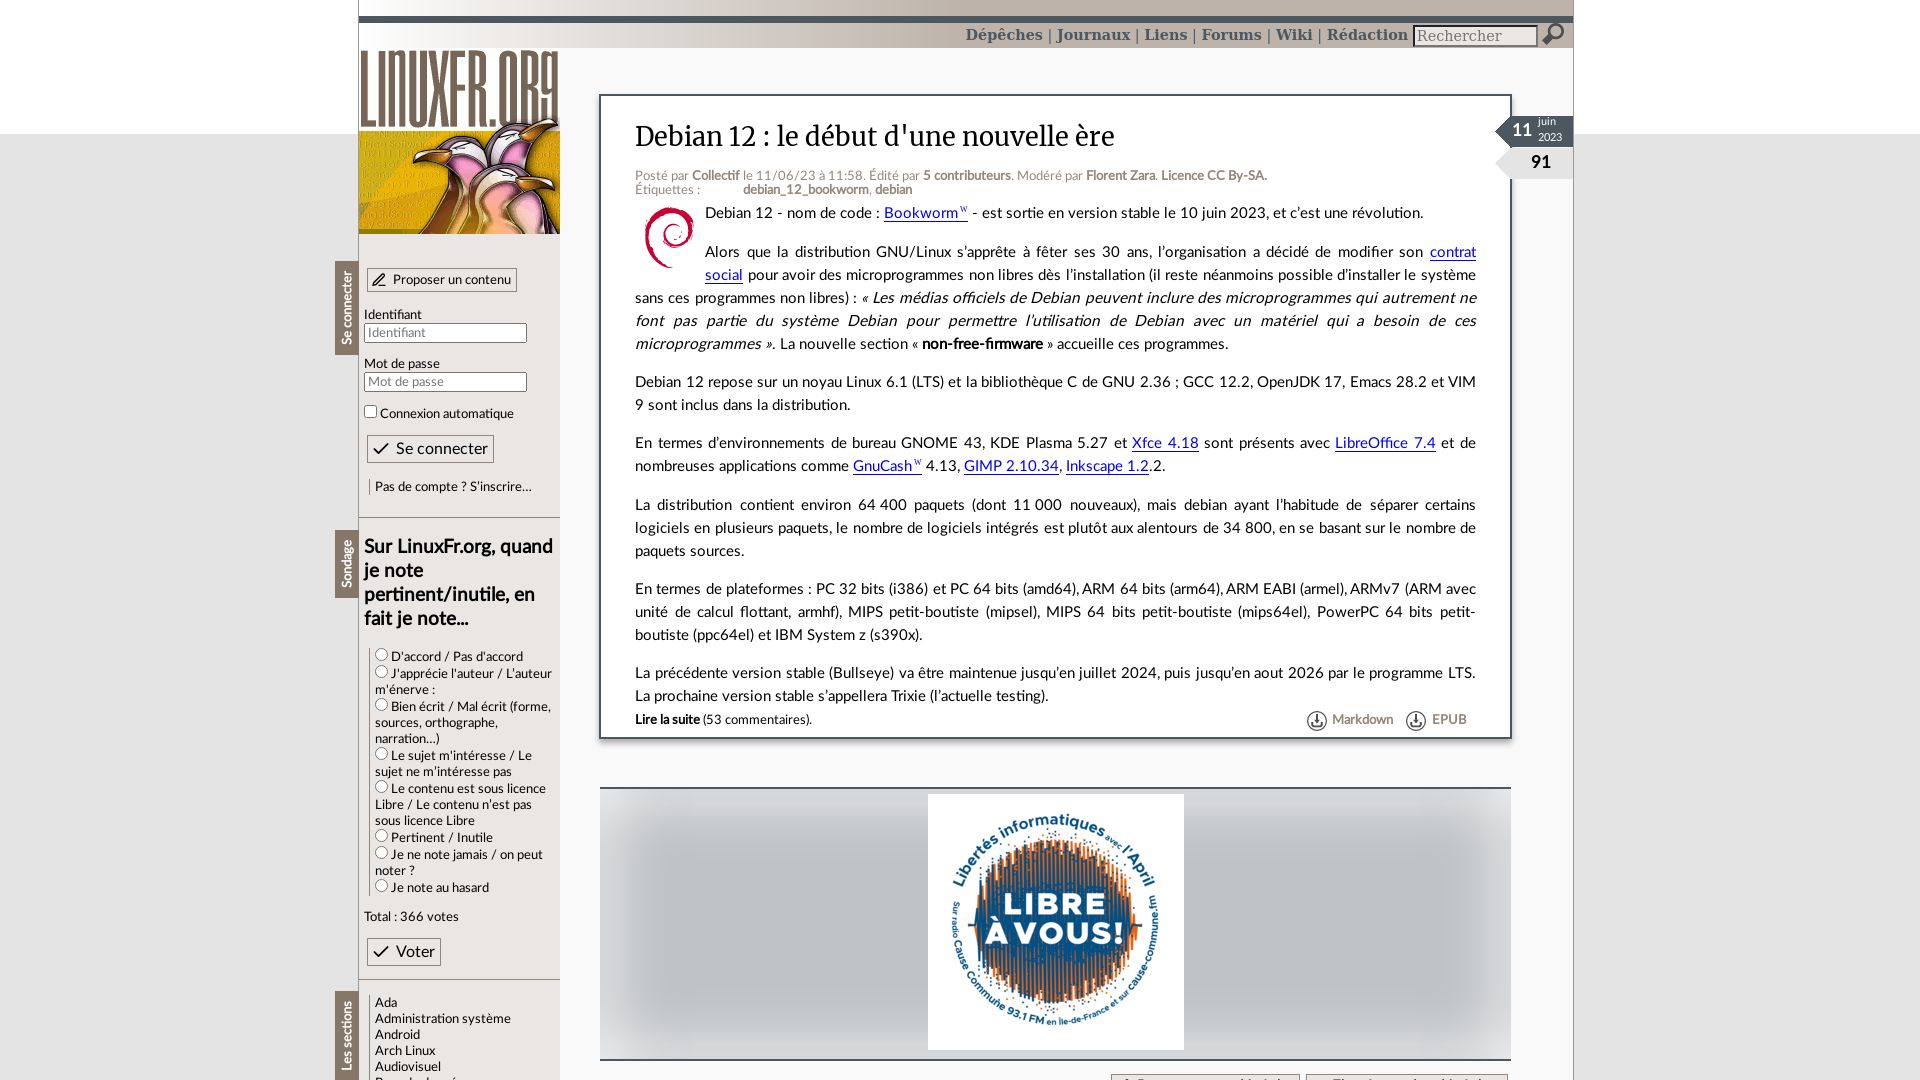 Status do site linuxfr.org está   ONLINE